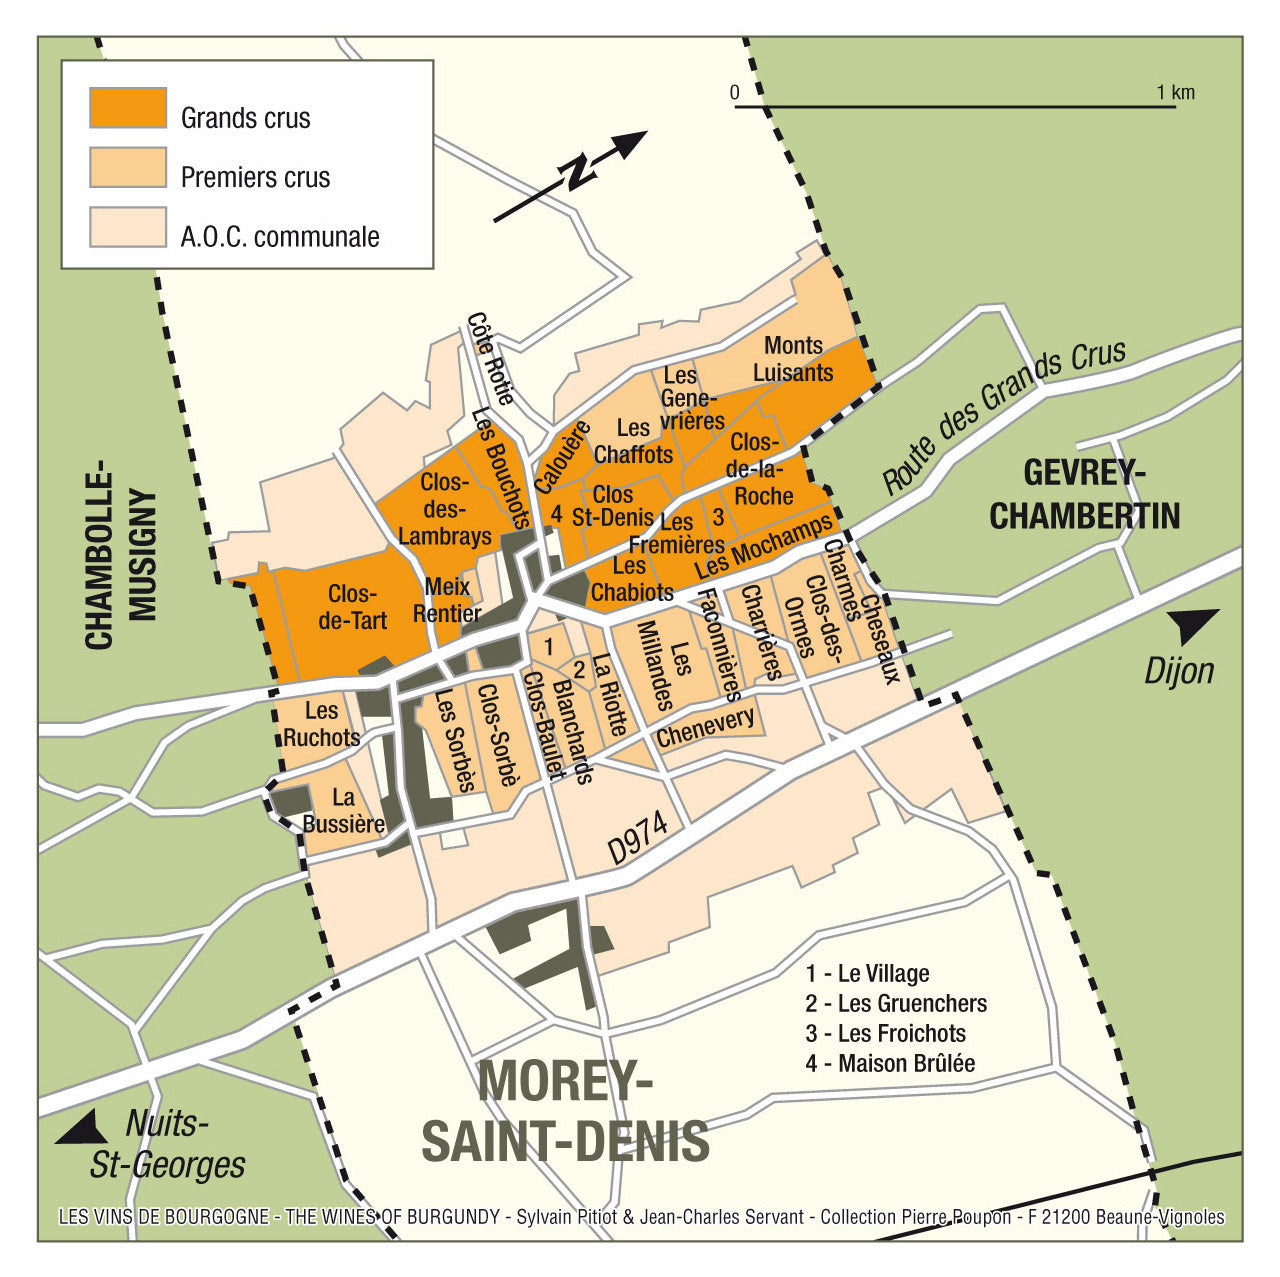 莫希-聖丹尼 (Morey-Saint-Denis)